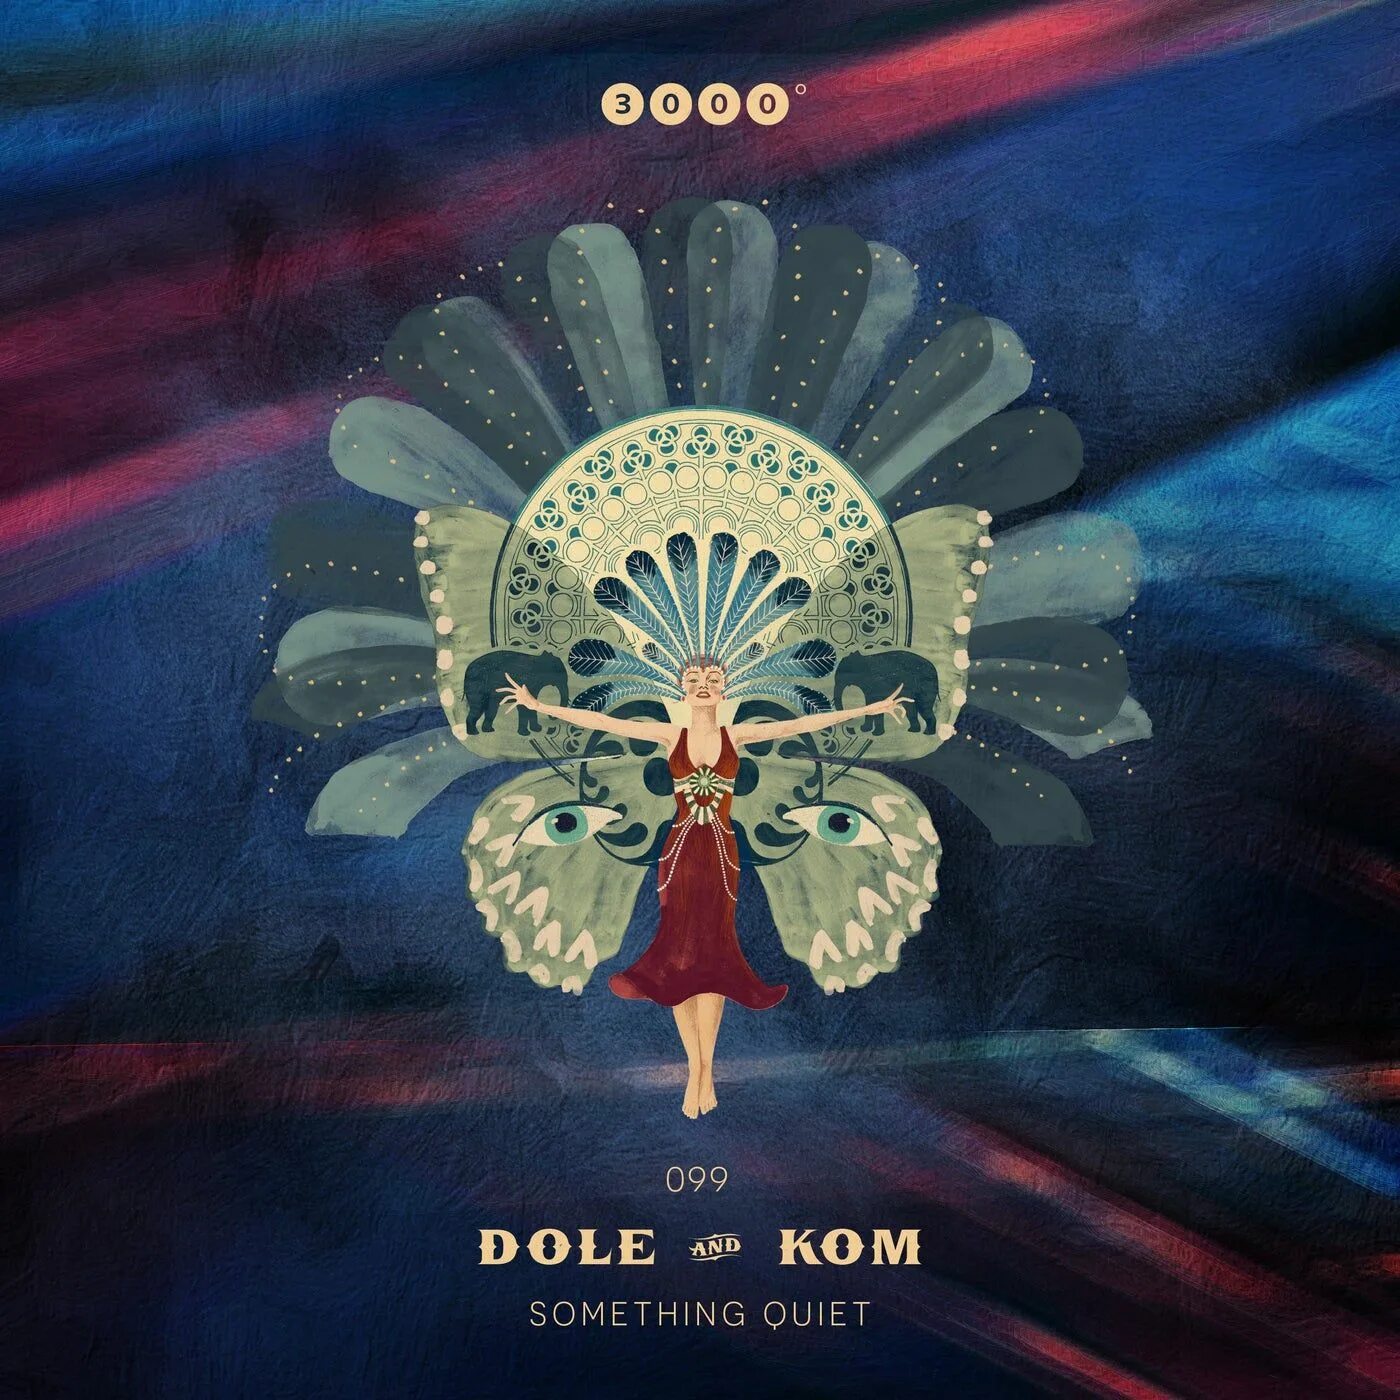 Dole & kom. Something quiet. Dole and kom - Pink Moon (Original Mix). Dole & kom - Ties (Uone Eagle Dreams Remix).